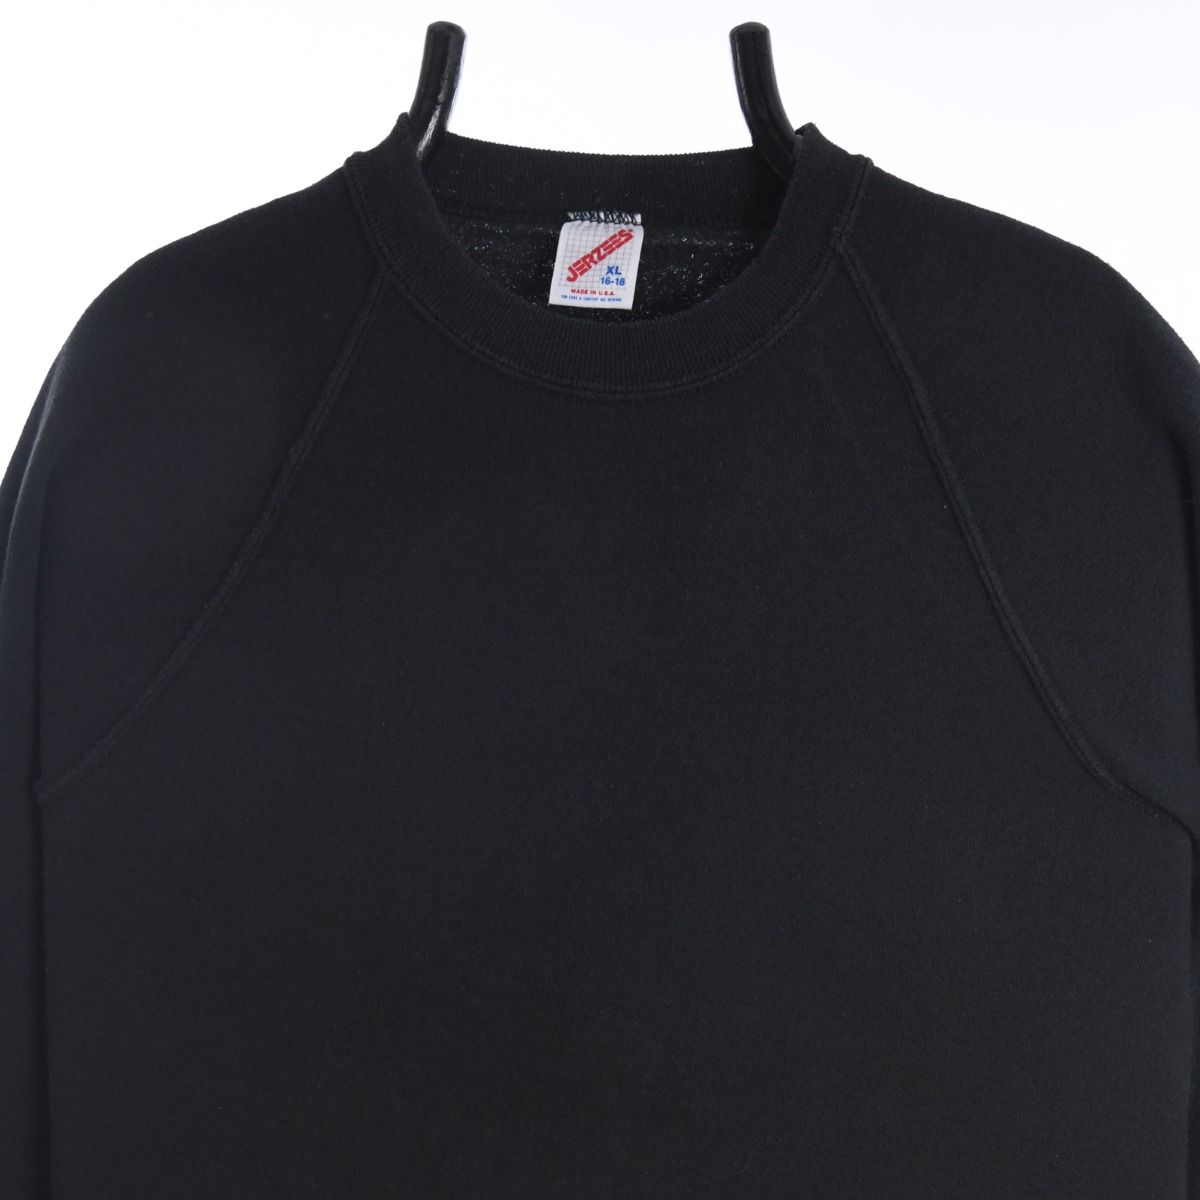 Jerzees 1990s Blank Black Sweatshirt